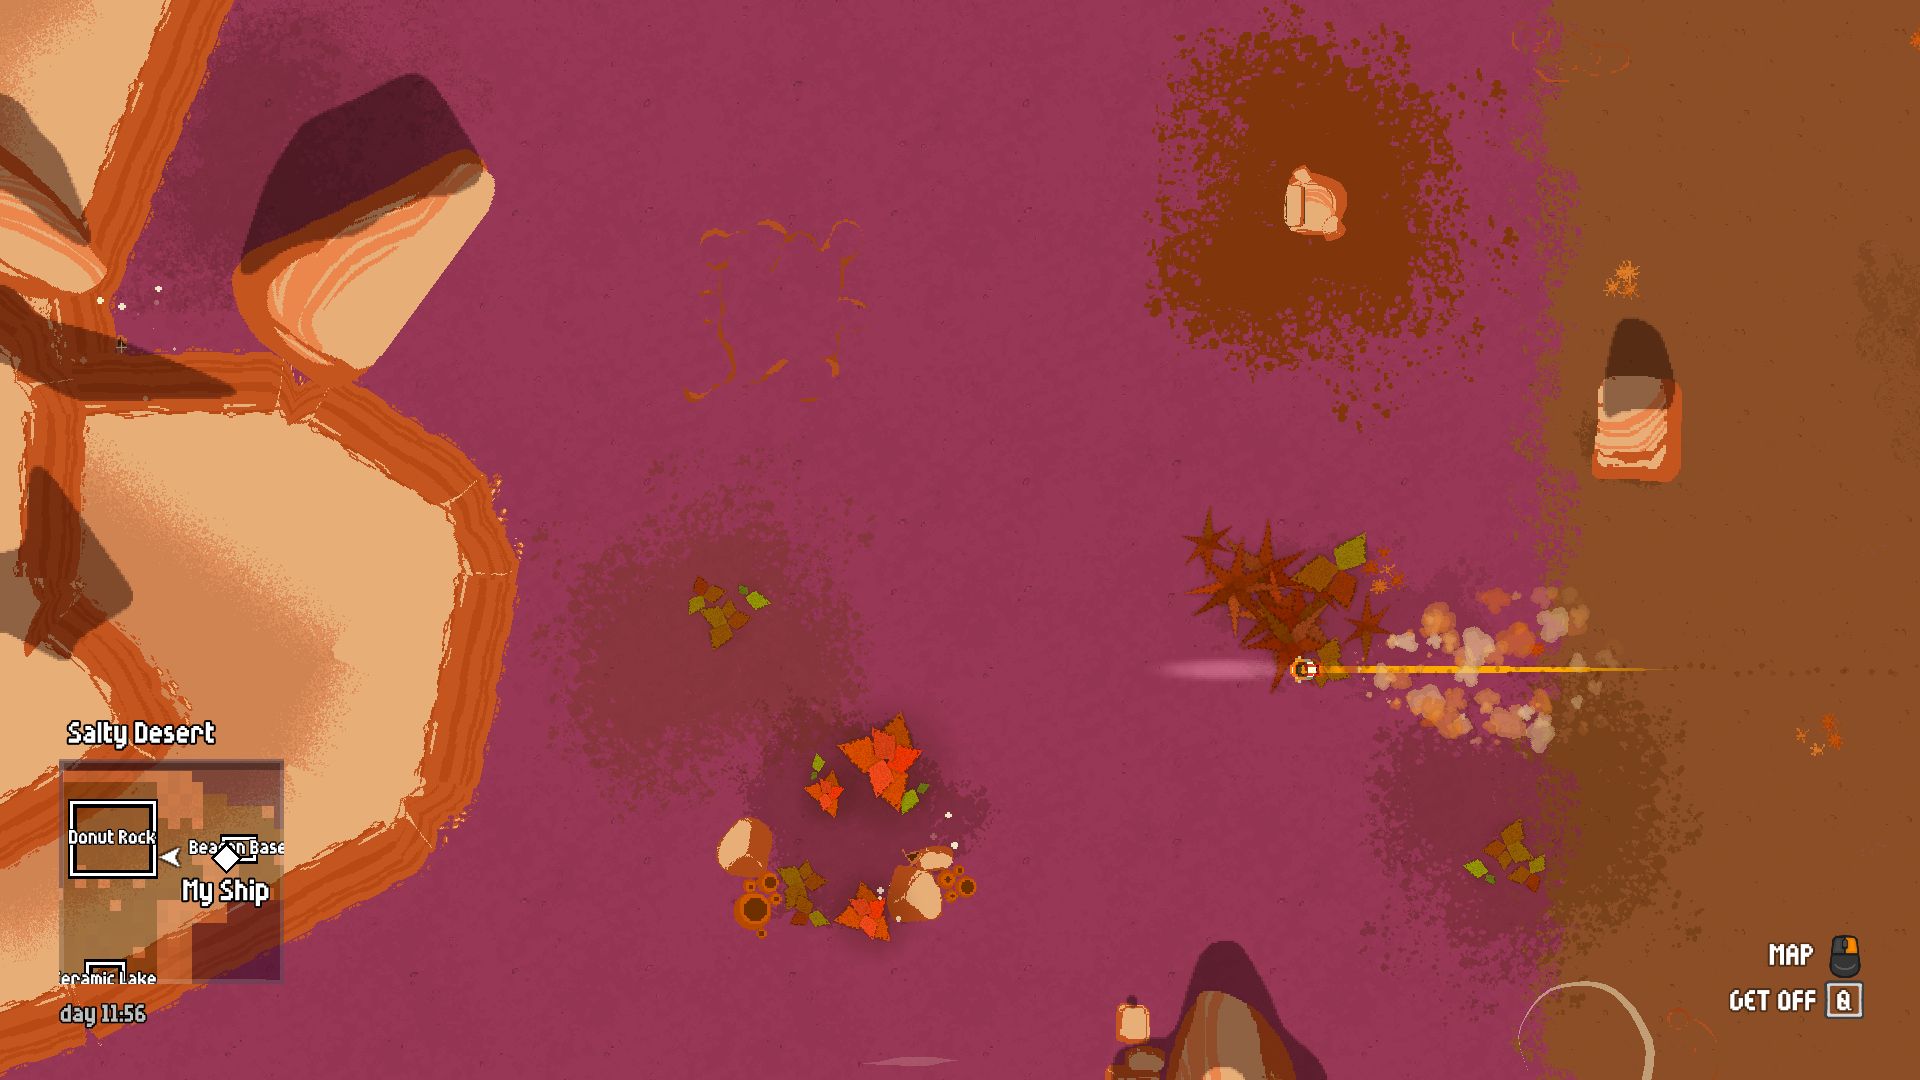 The player character in FixFox speeding across a purple and orange desert